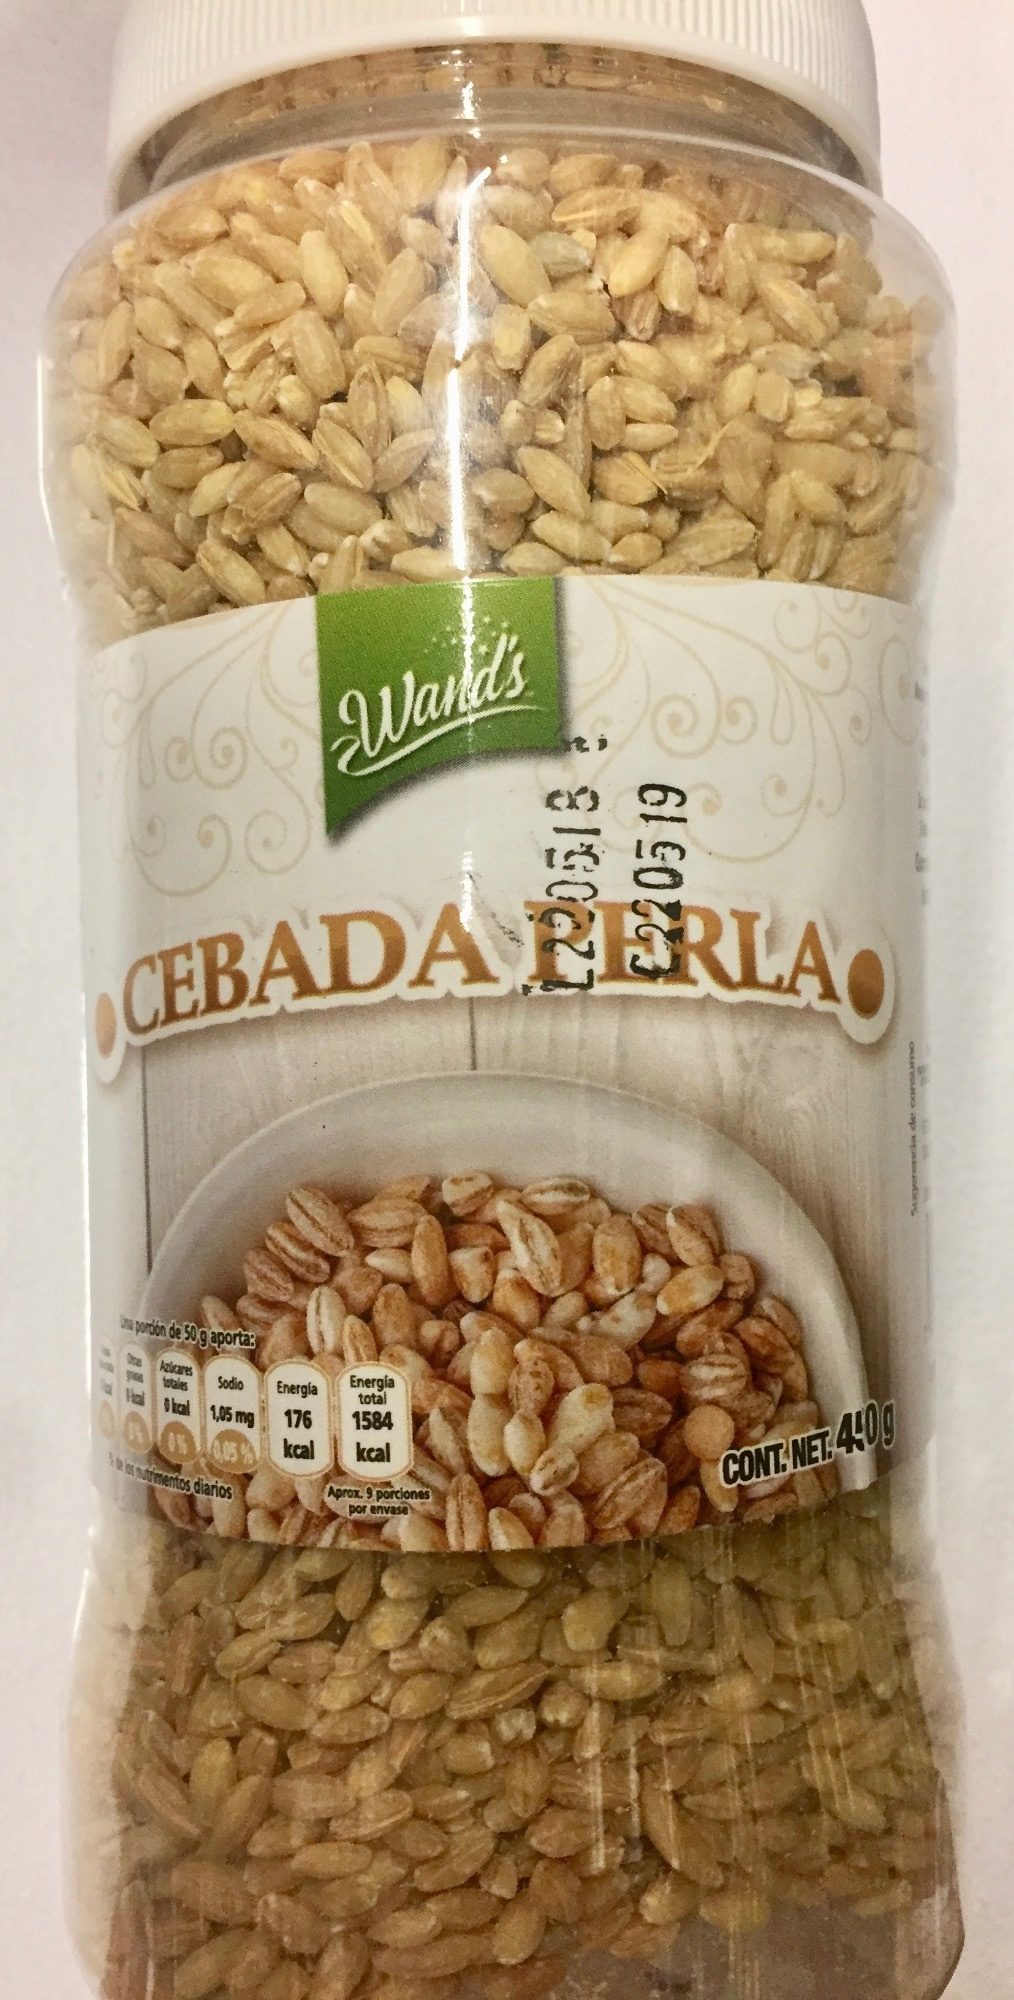 Cebada Perla Wand's - Product - es